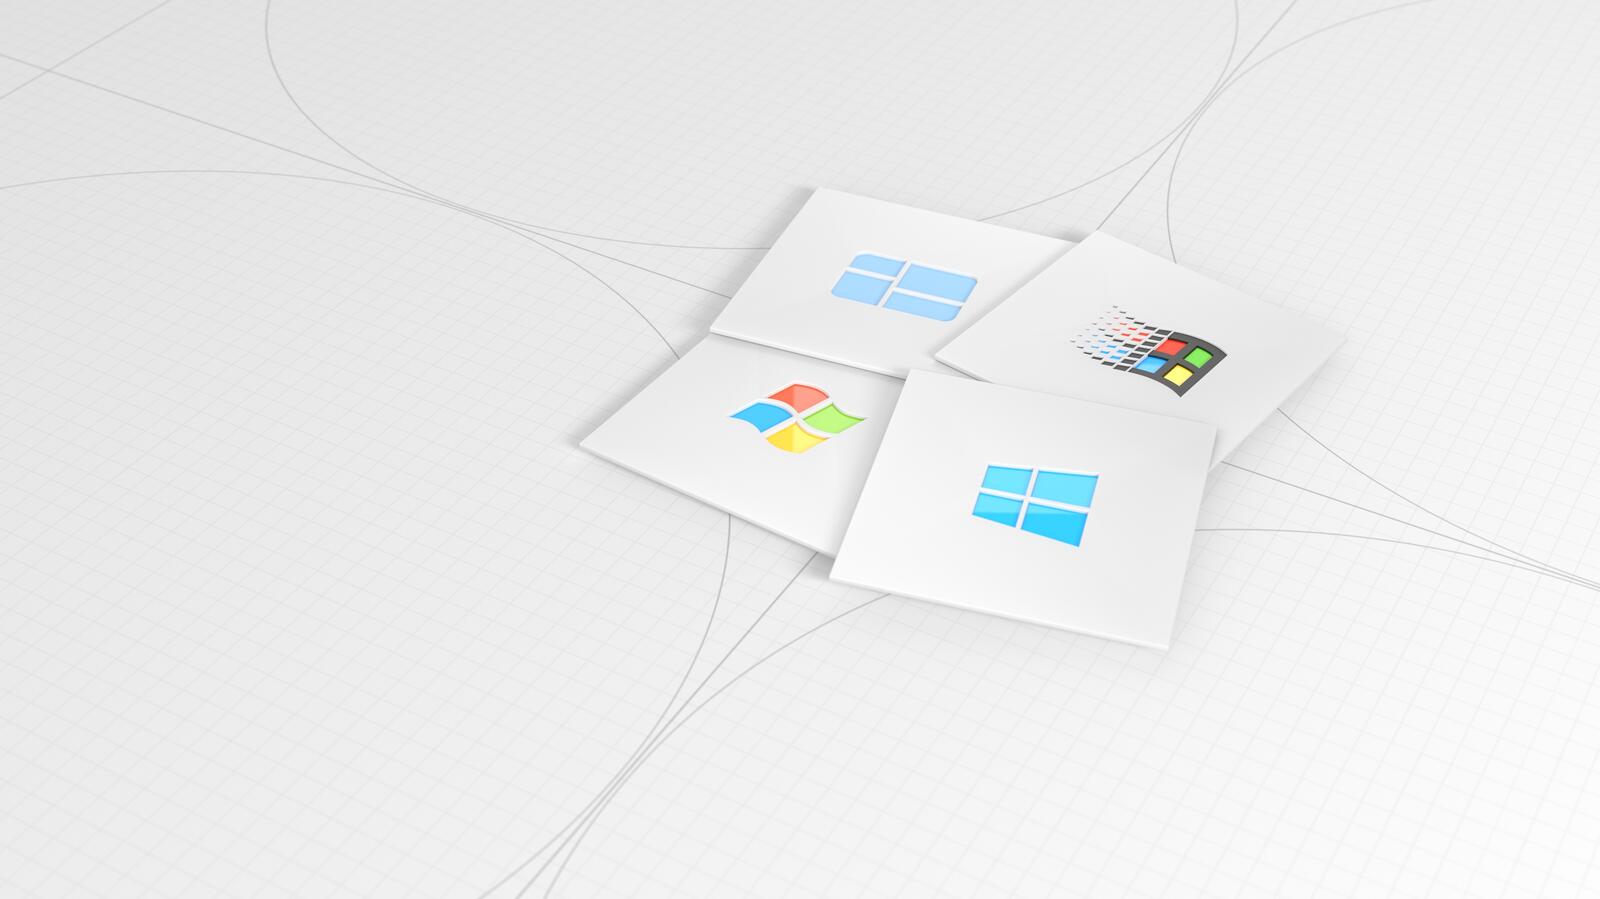 Free photo Windows logos drawn on a piece of paper